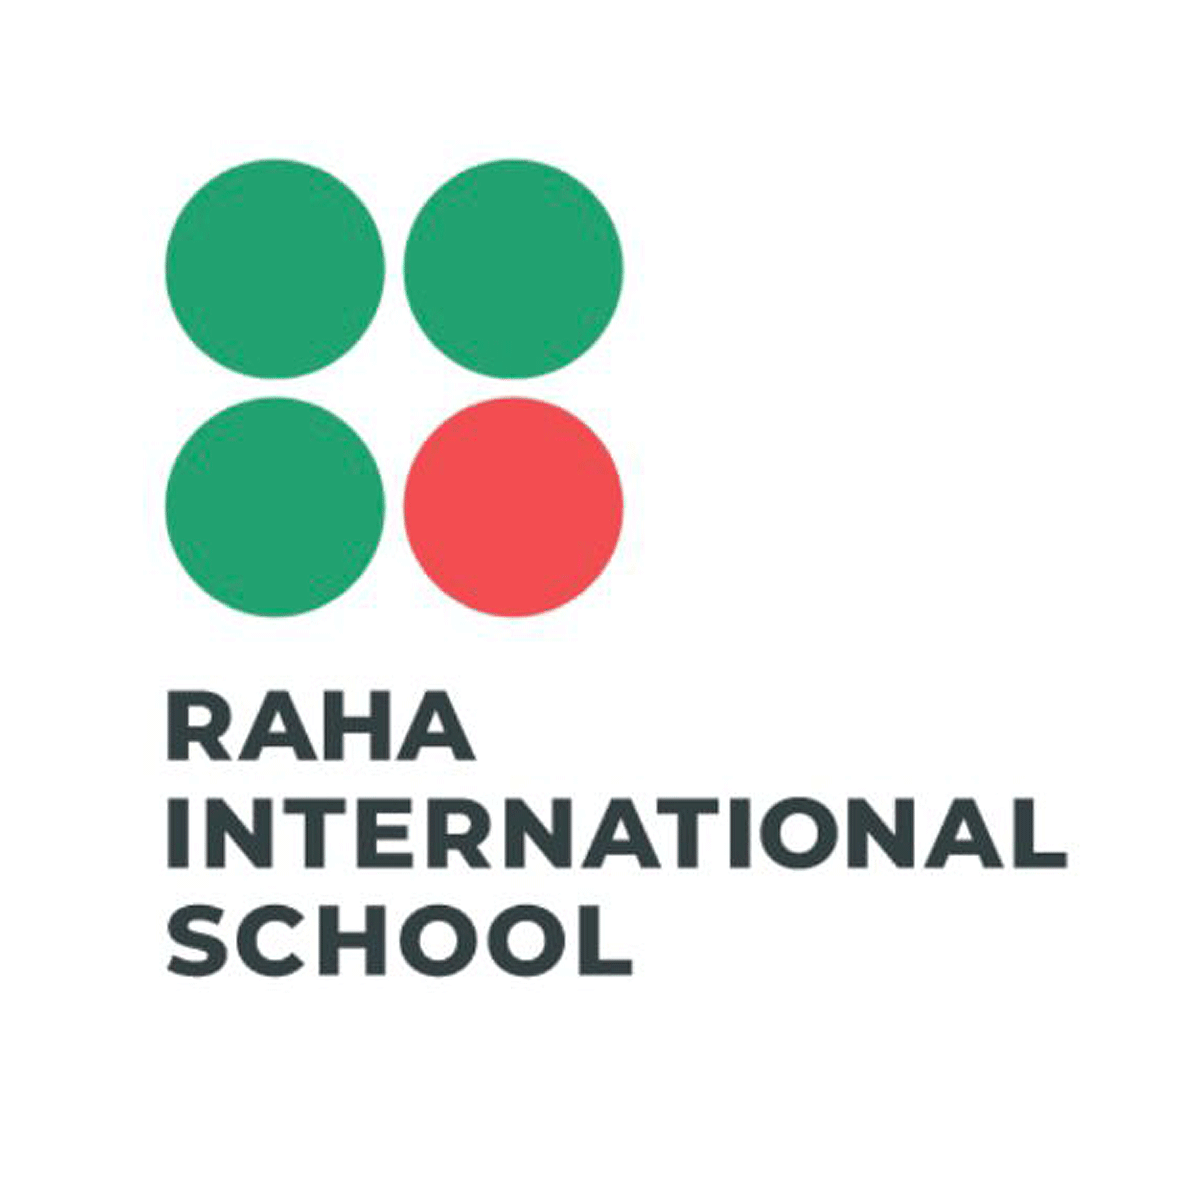 RAHA International School